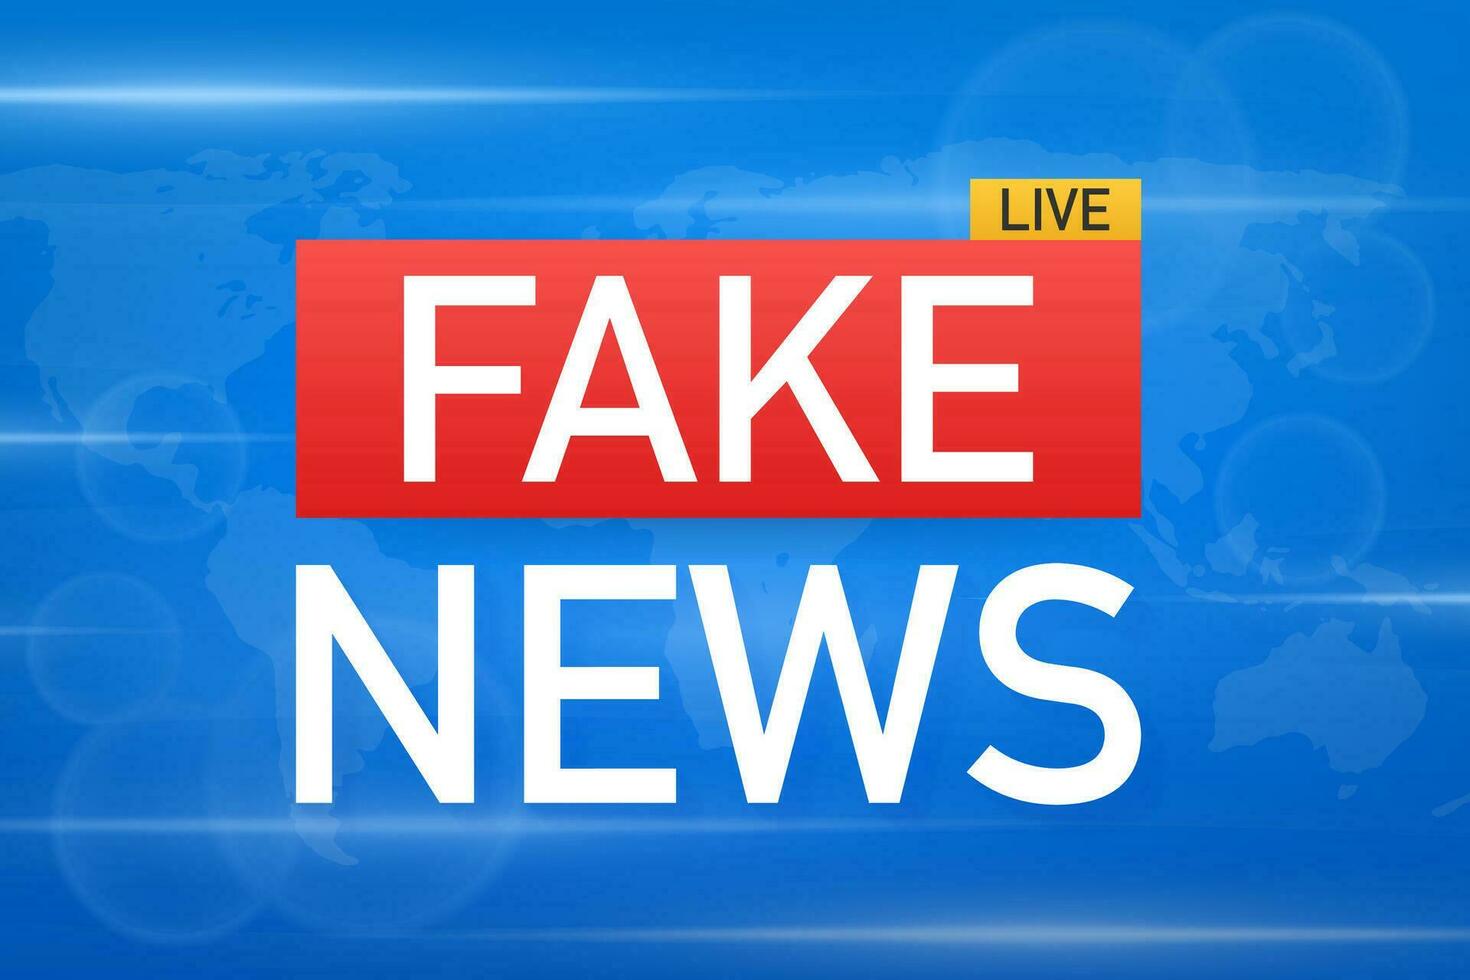 Fake News Live on World Map Background. Vector Illustration